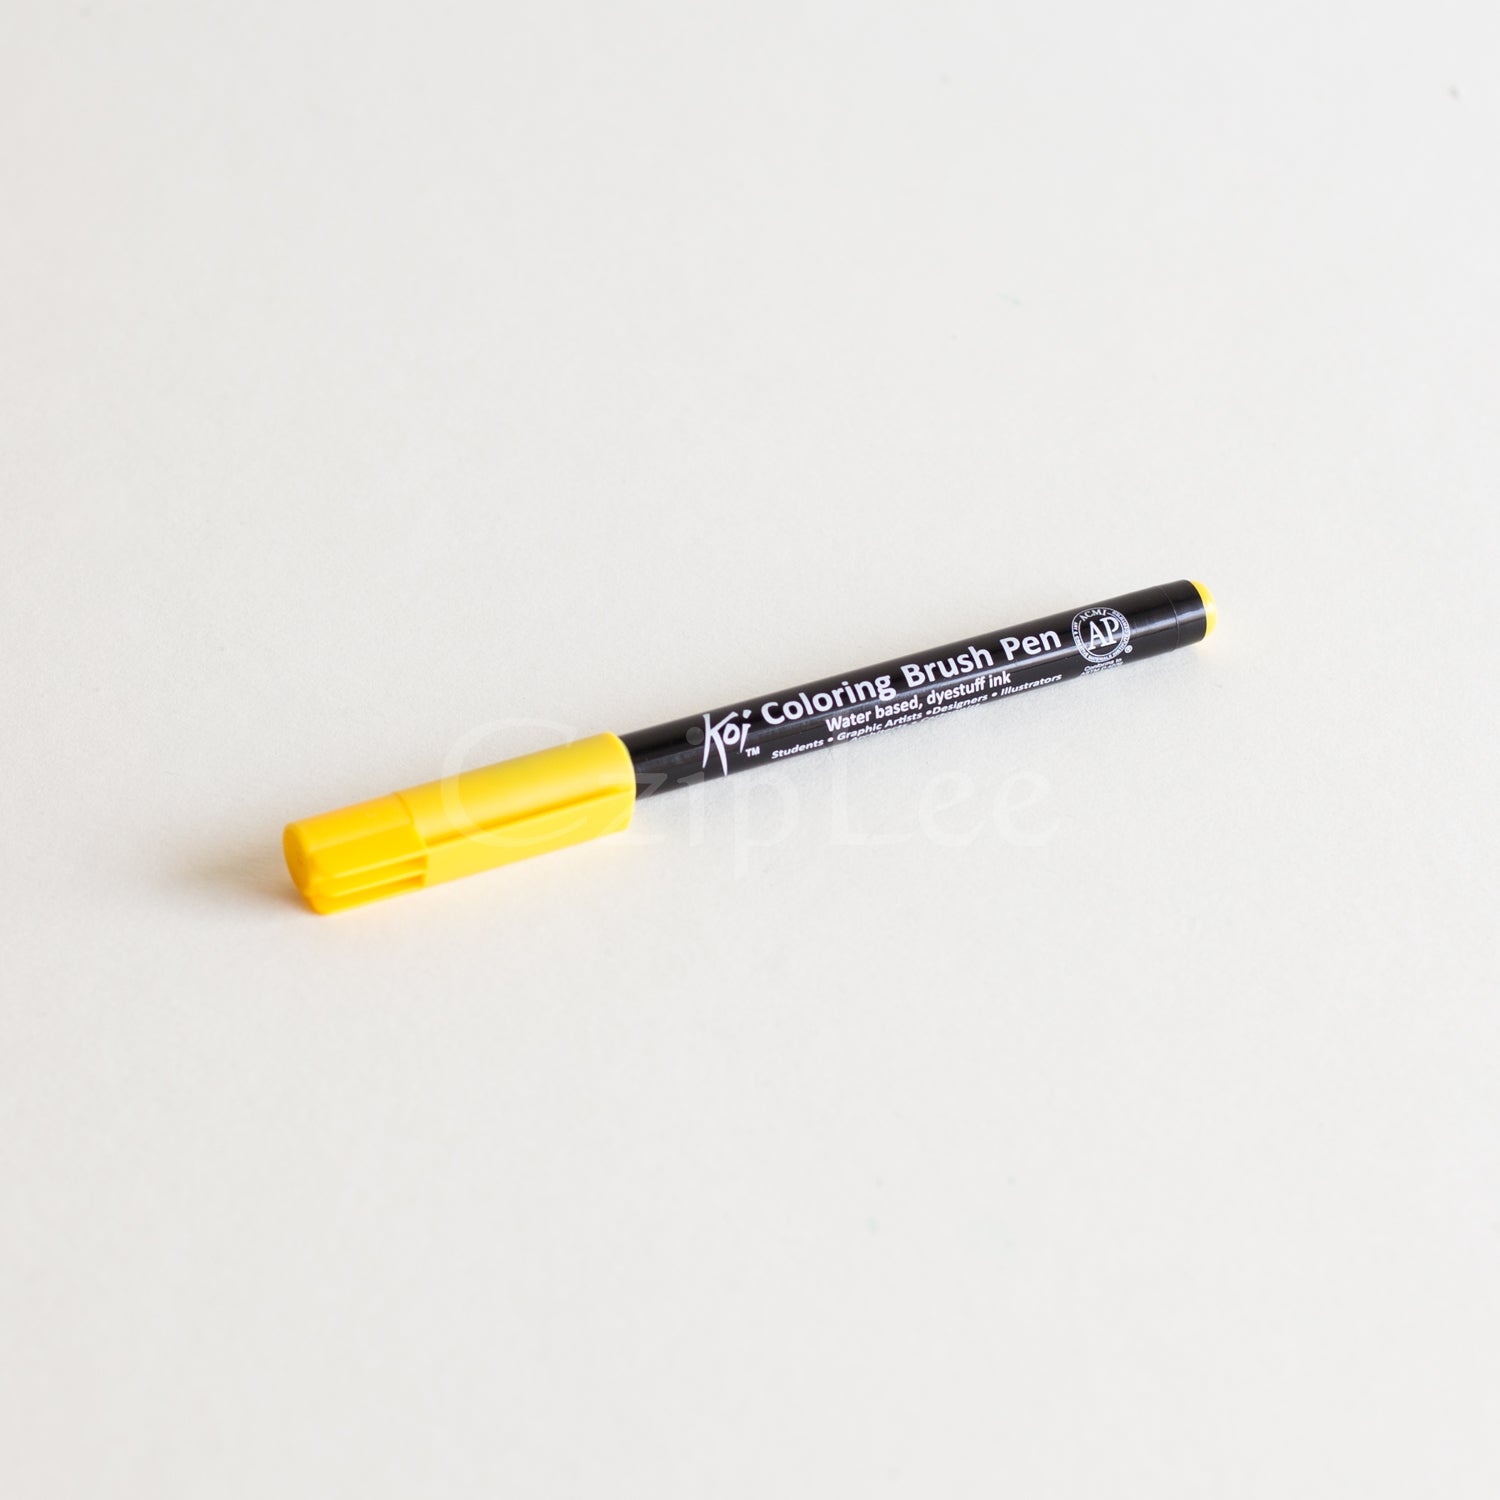 SAKURA Koi Brush Pen #003 Yellow